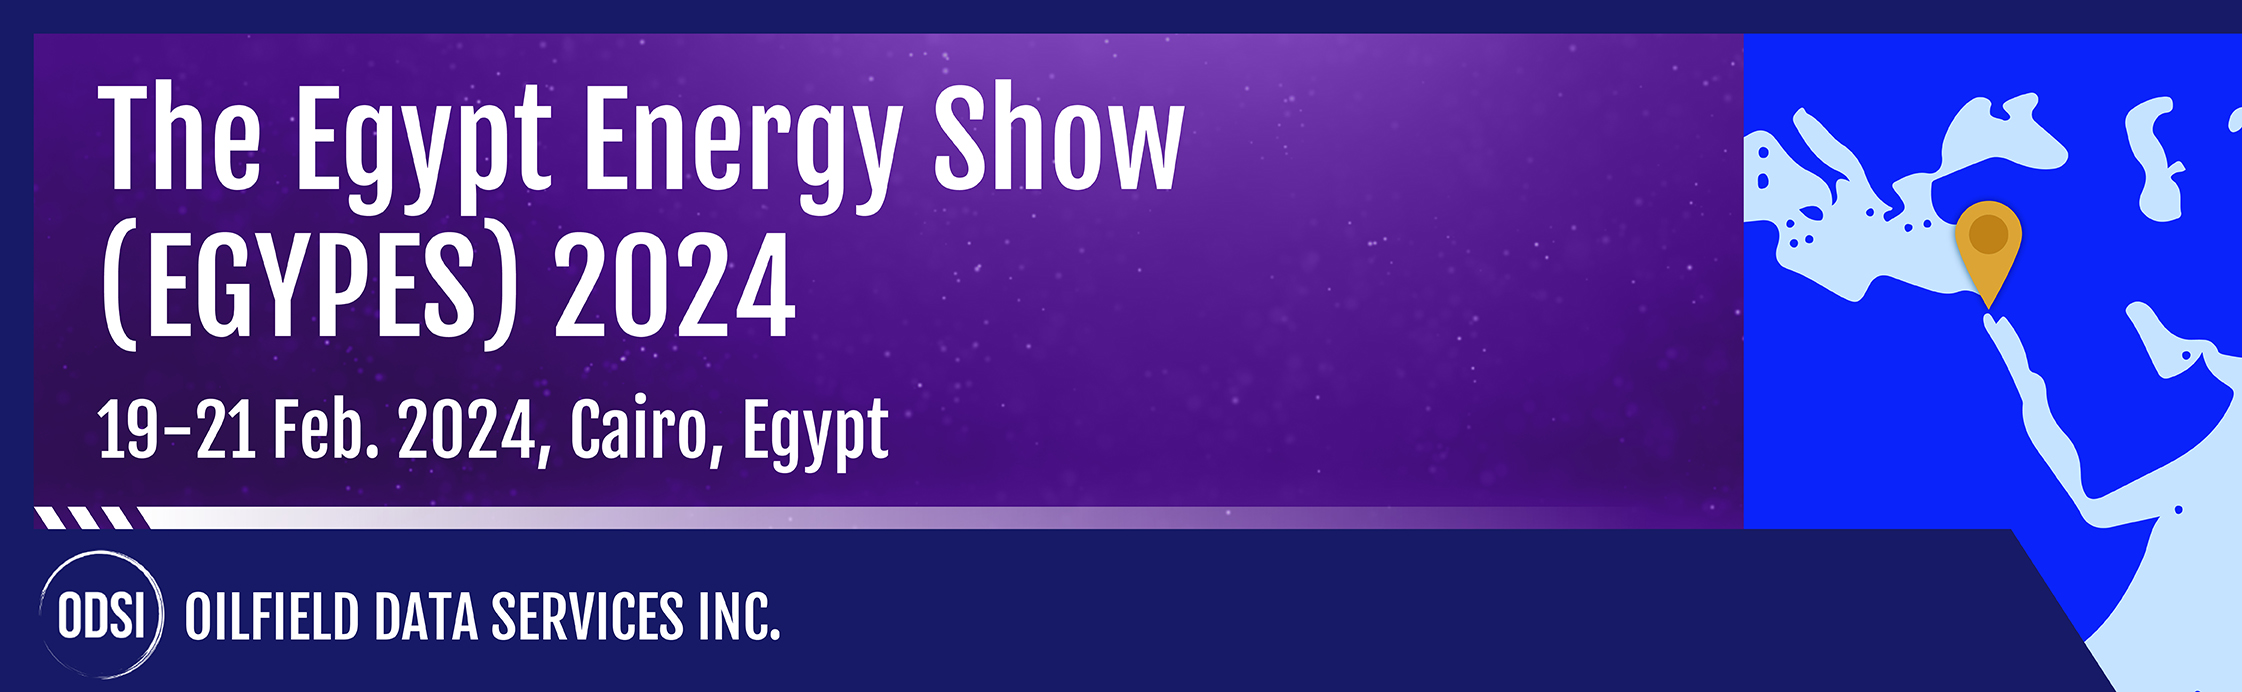 The Egypt Energy Show (EGYPES) 2024